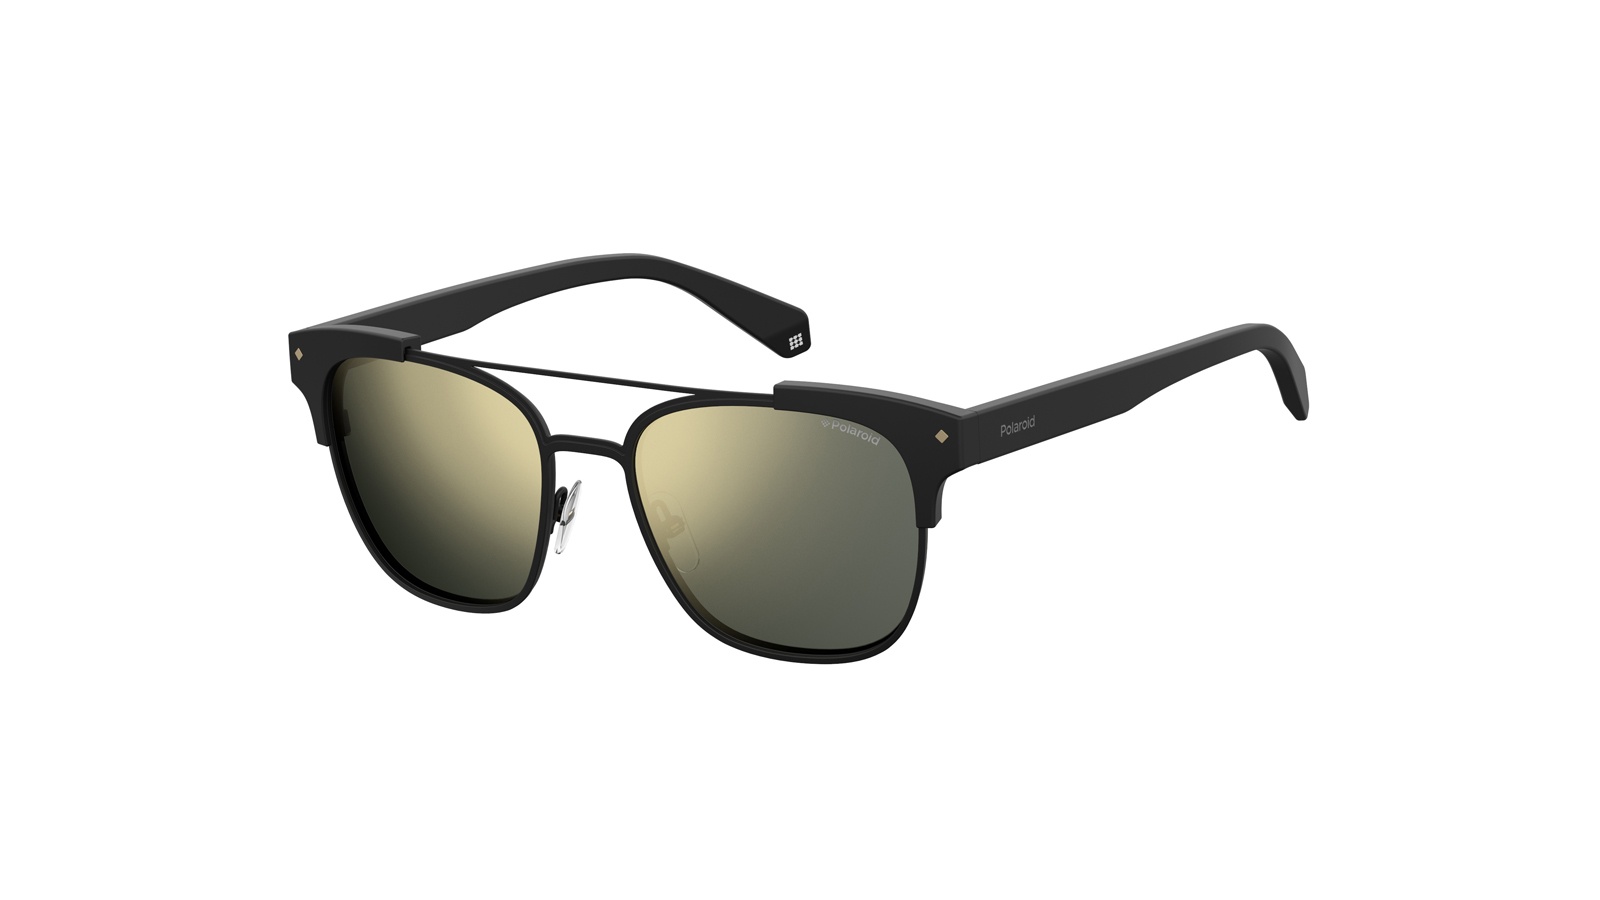 GRAND Aluminum Frame Polarized Sunglasses | Free Shipping, Buy Now!